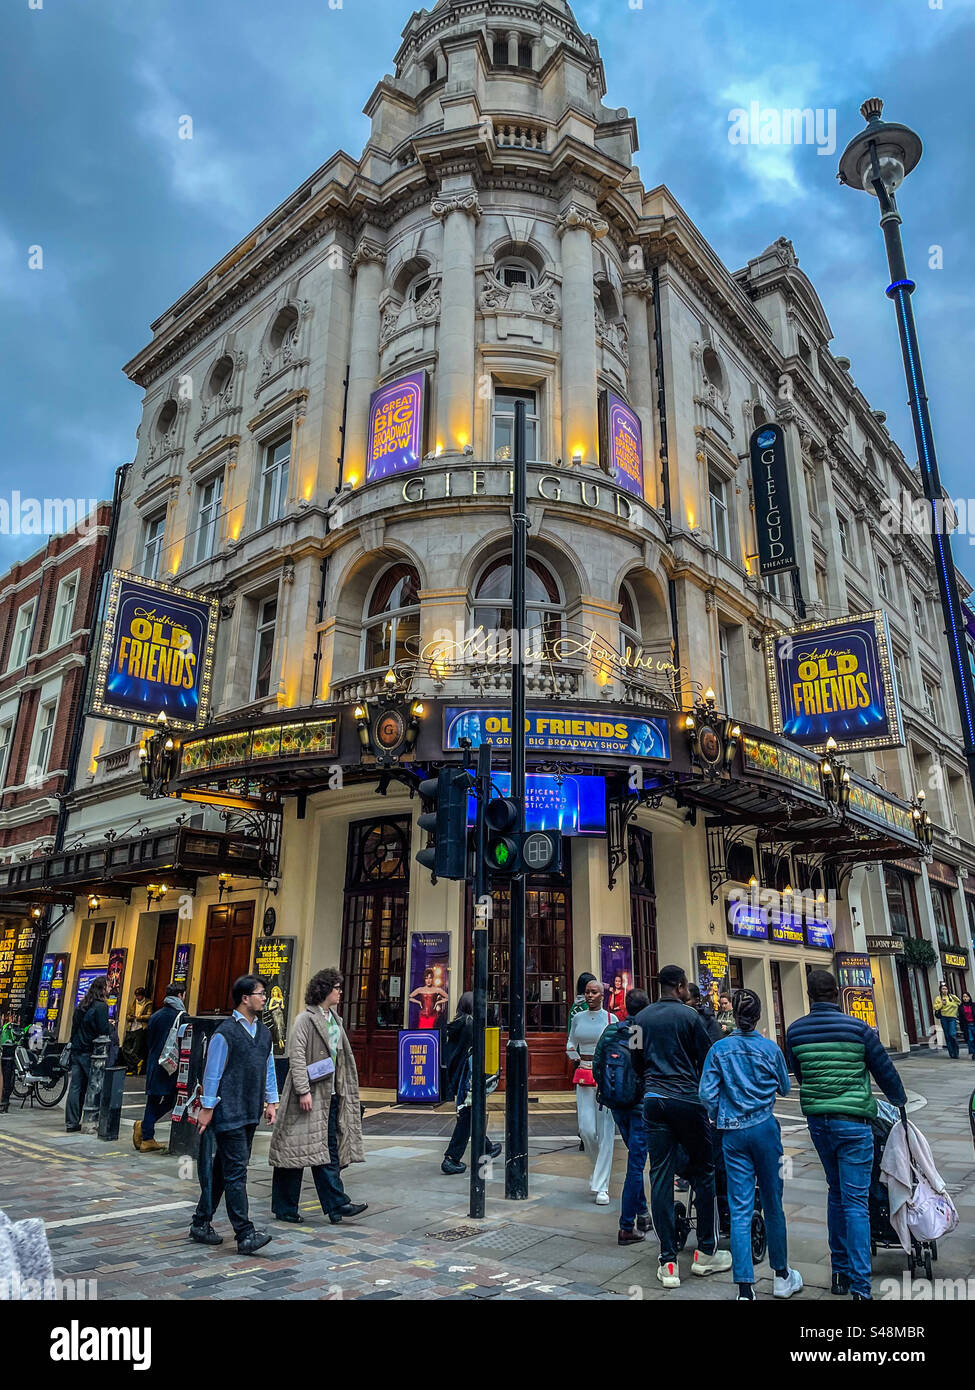 Gielgud theatre, London Stock Photo